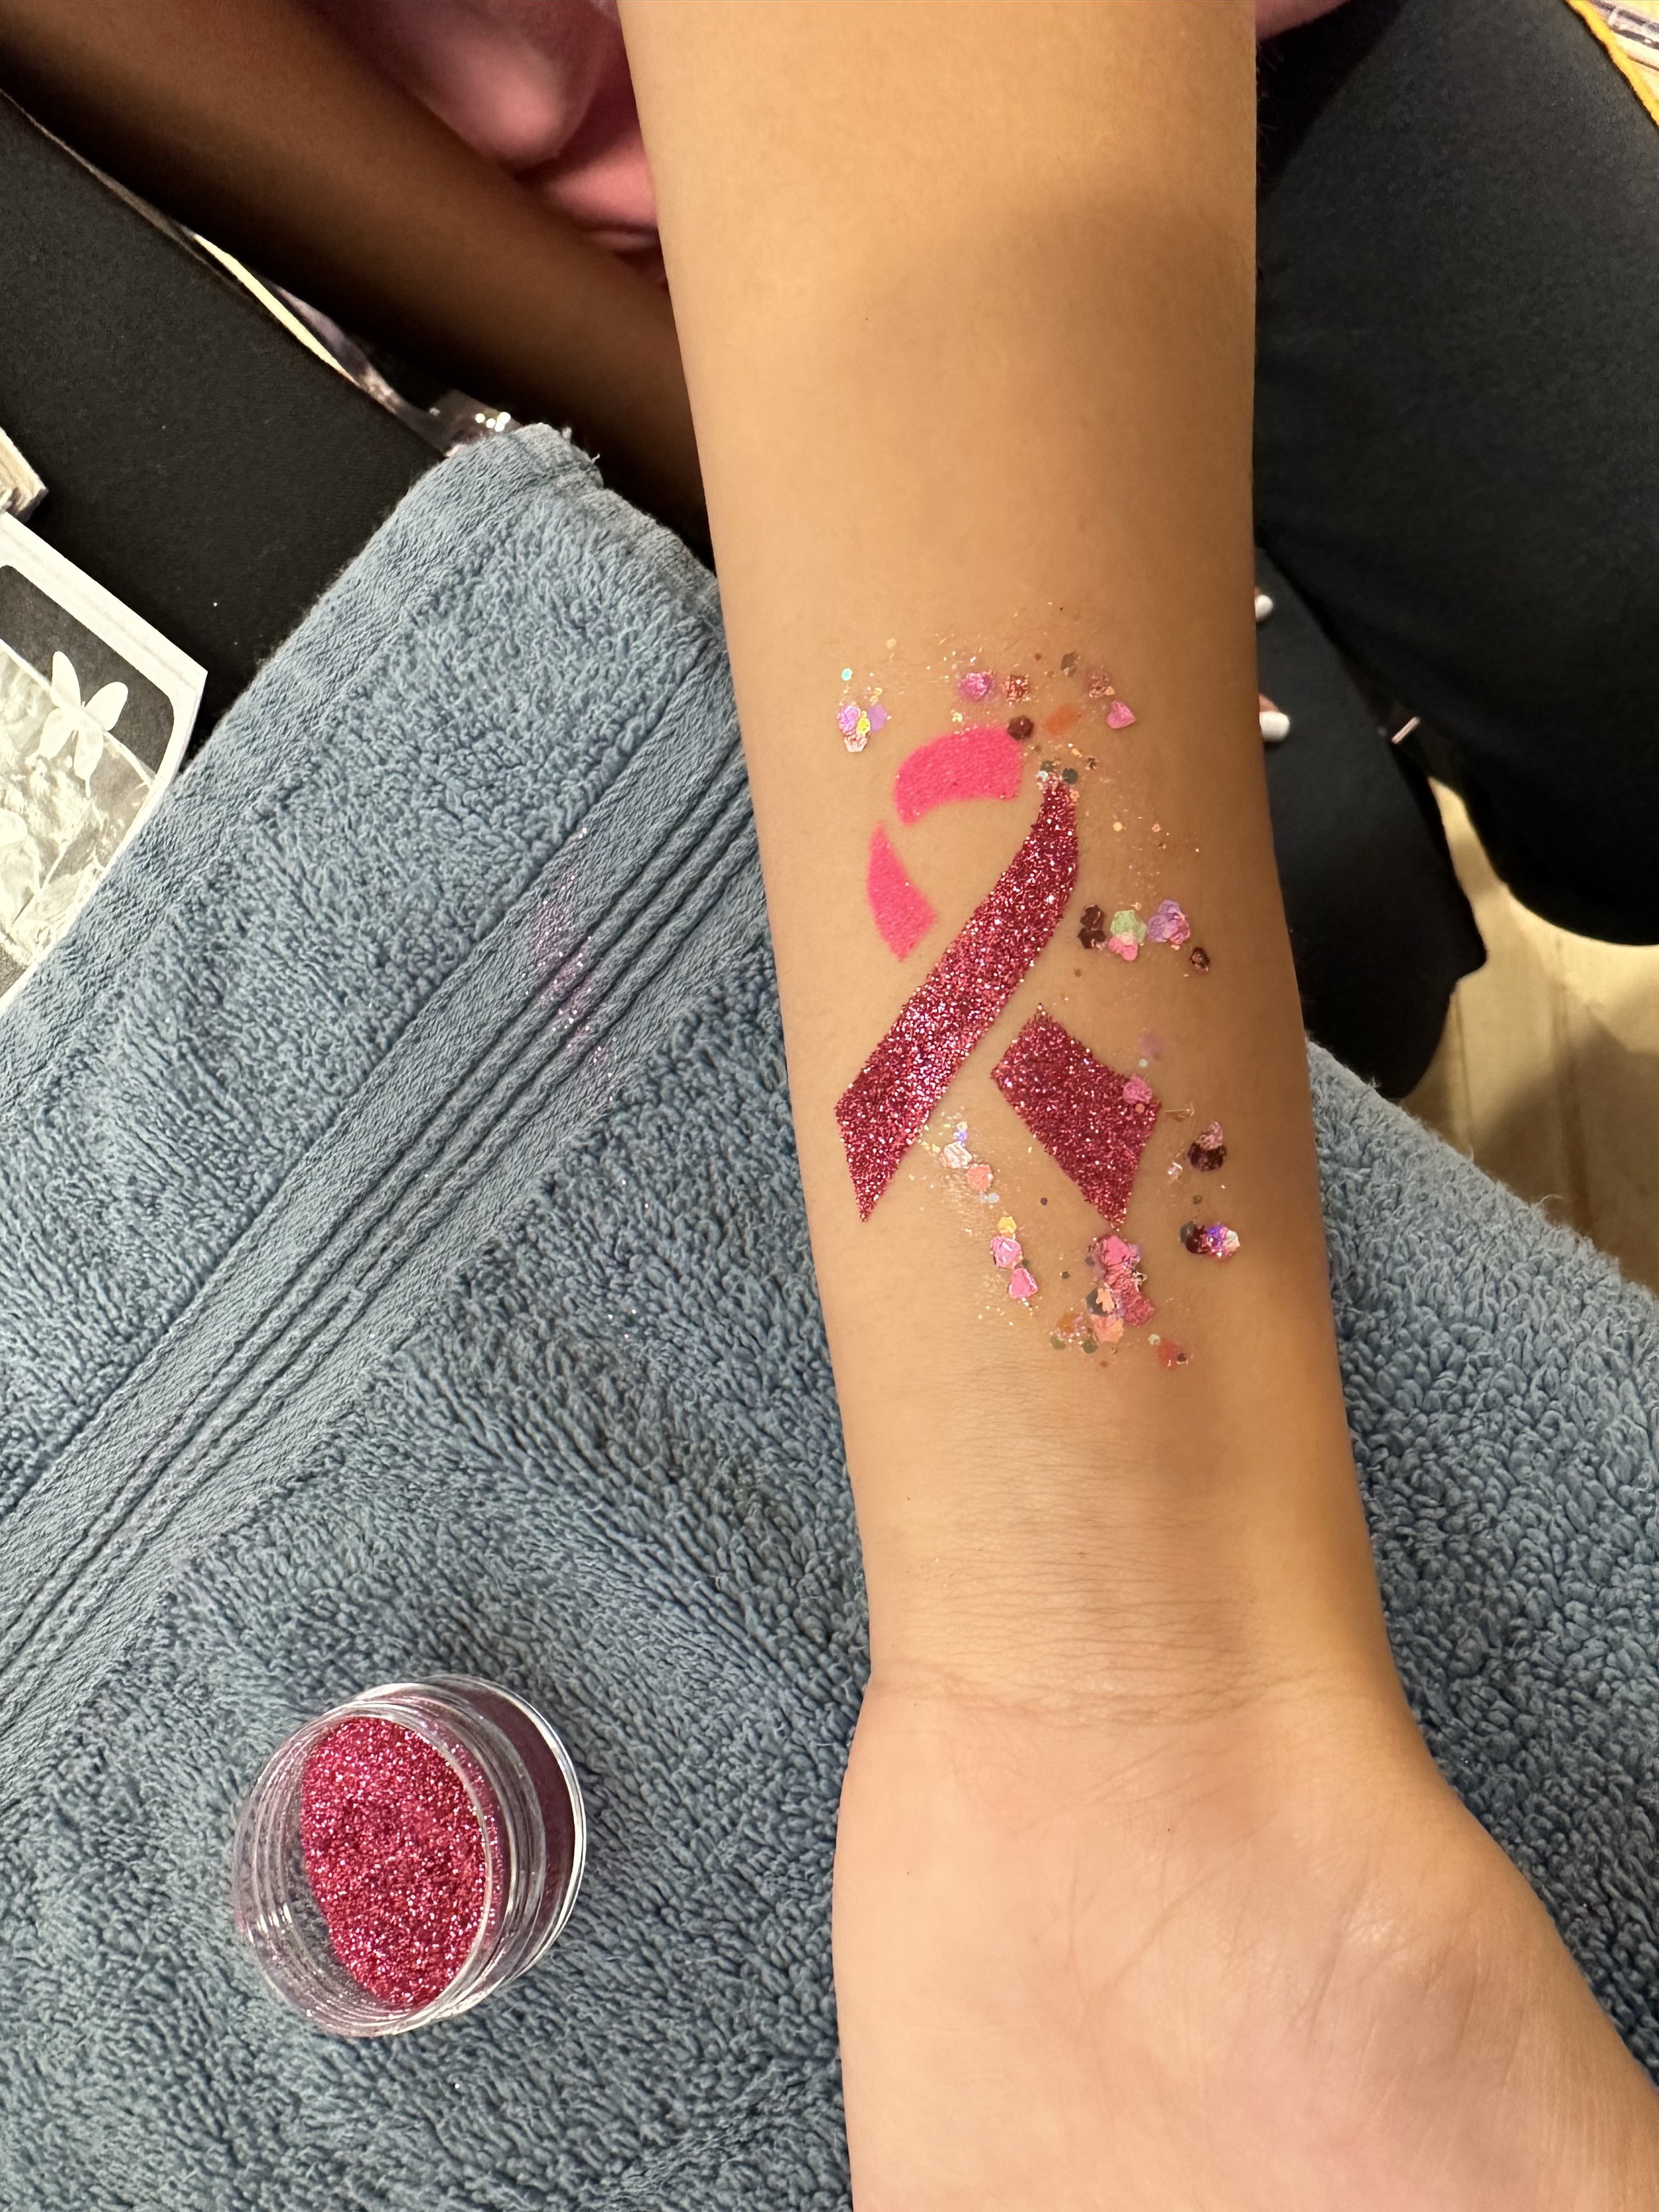 Glitter Tattoo Artist for Breast Cancer Awareness Event NYC.jpg